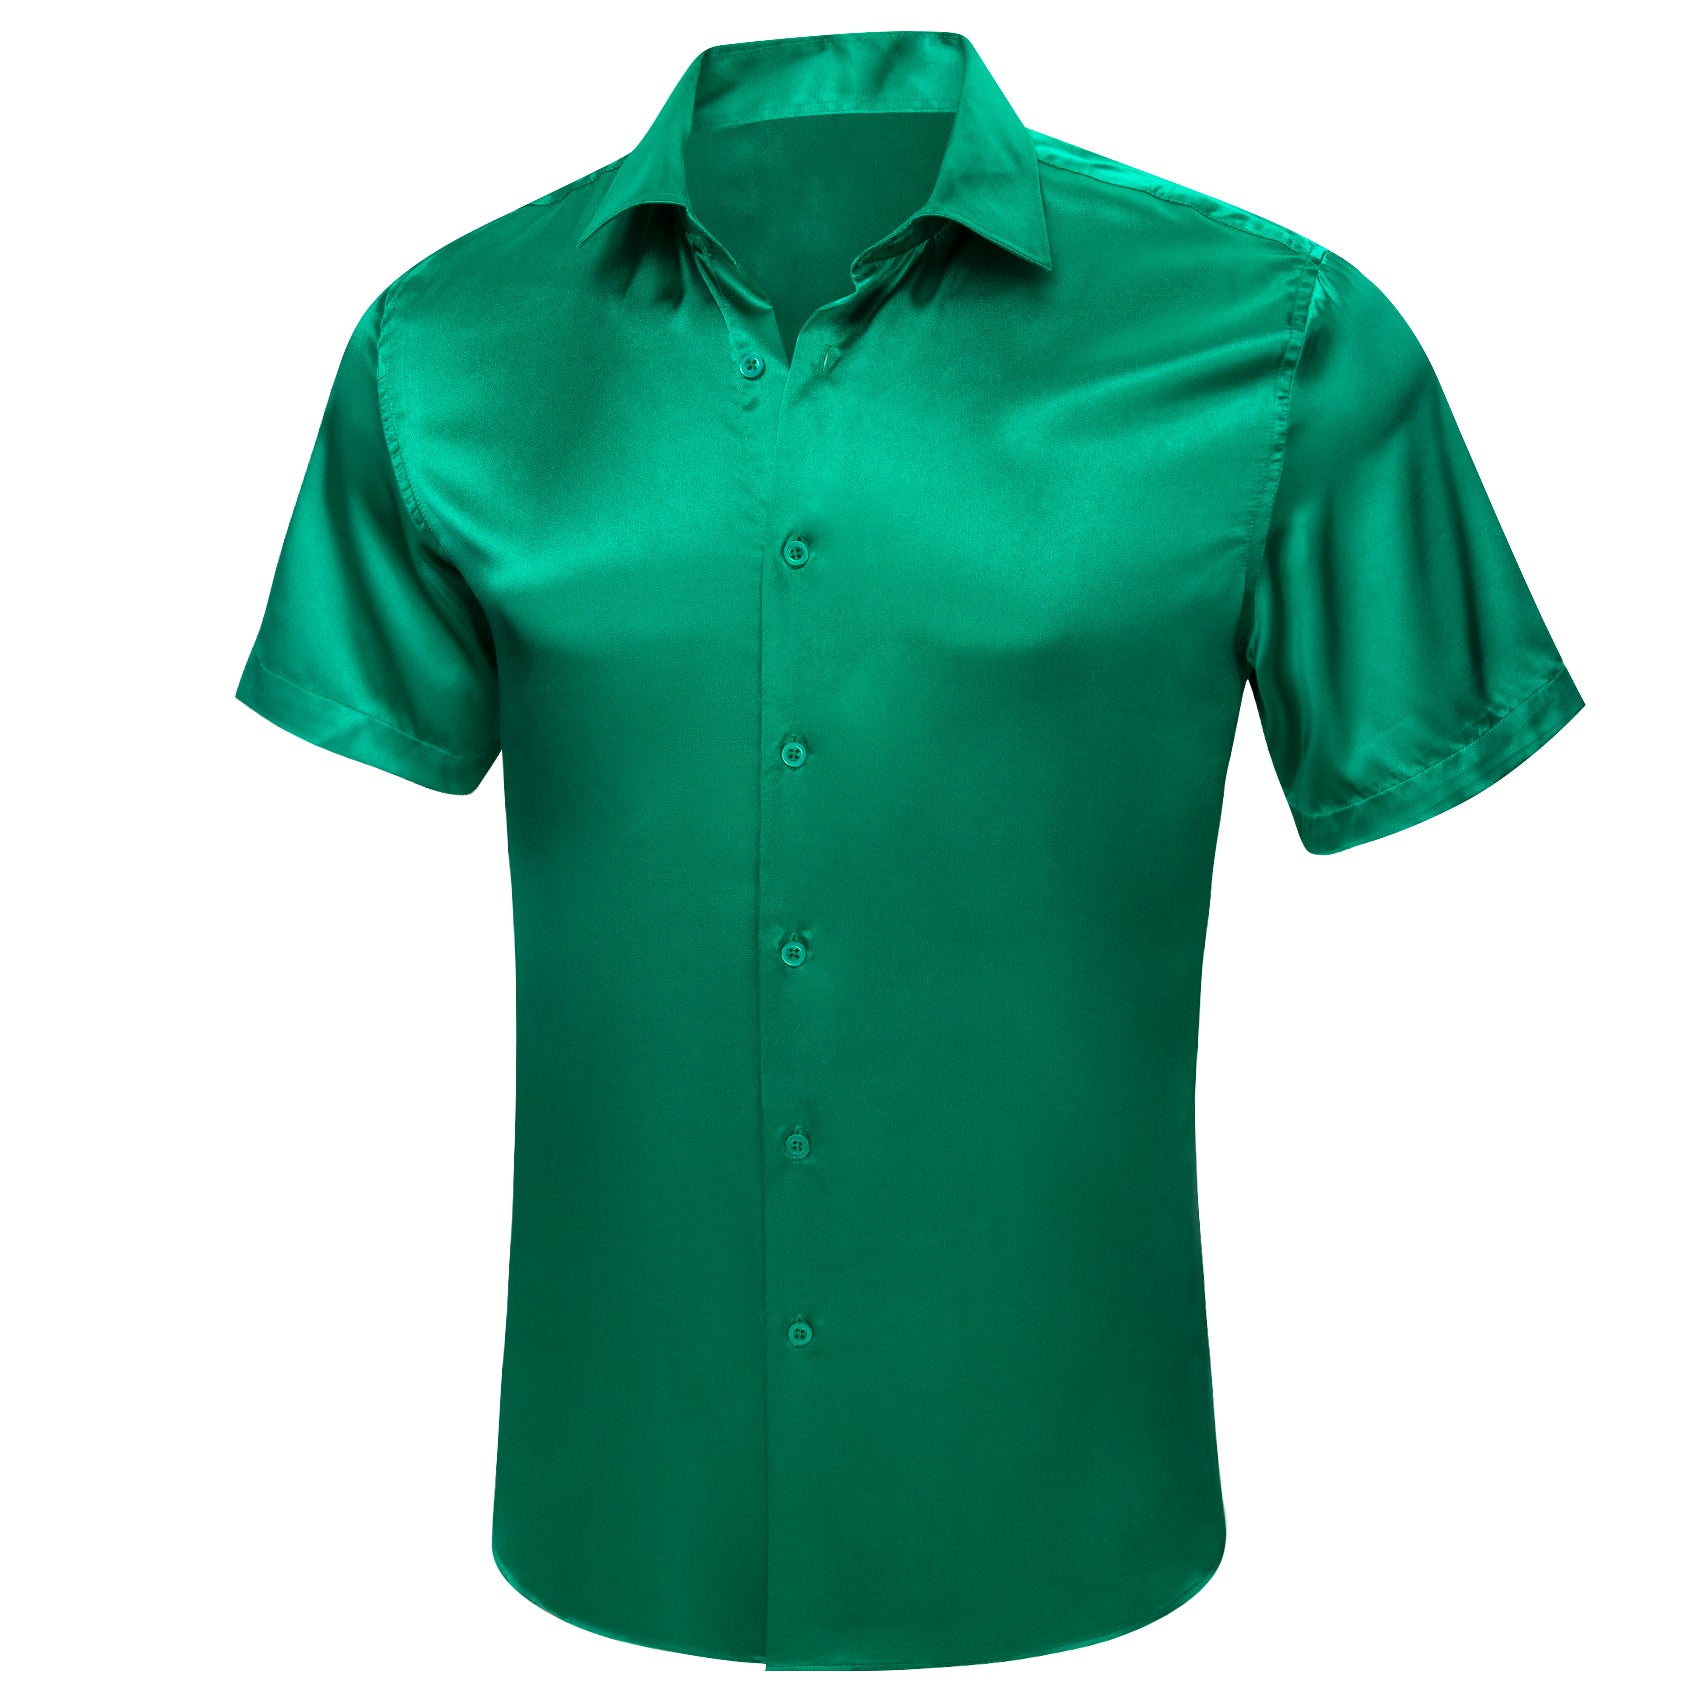 Barry.wang Green Solid Short Sleeves Shirt